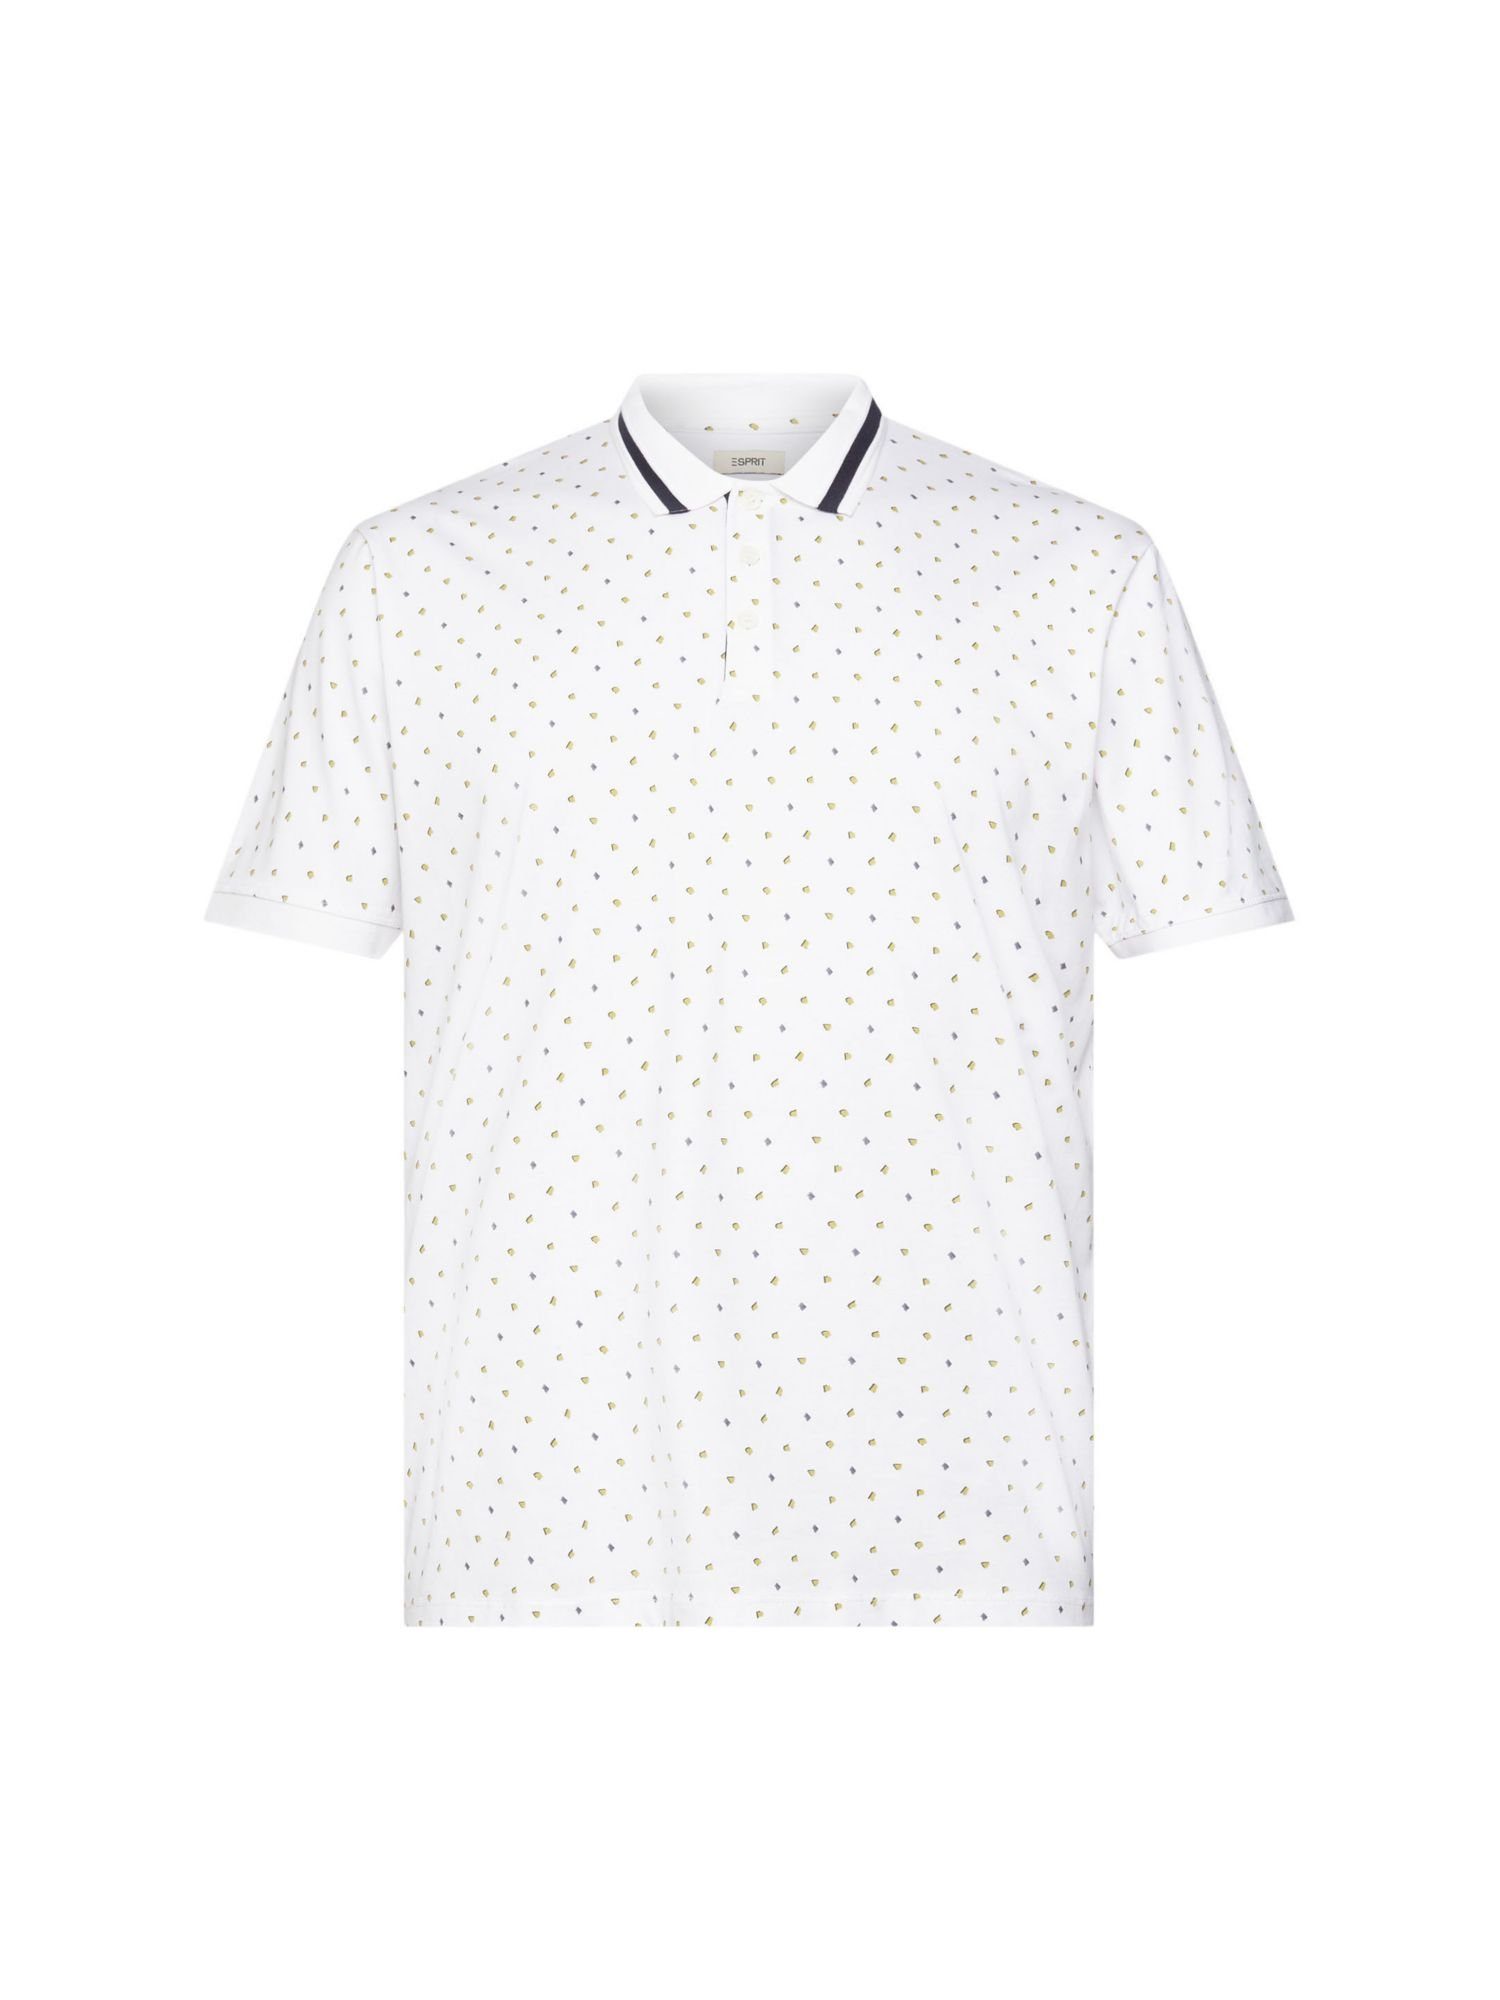 Esprit Poloshirt Poloshirt mit Allover-Muster OFF WHITE